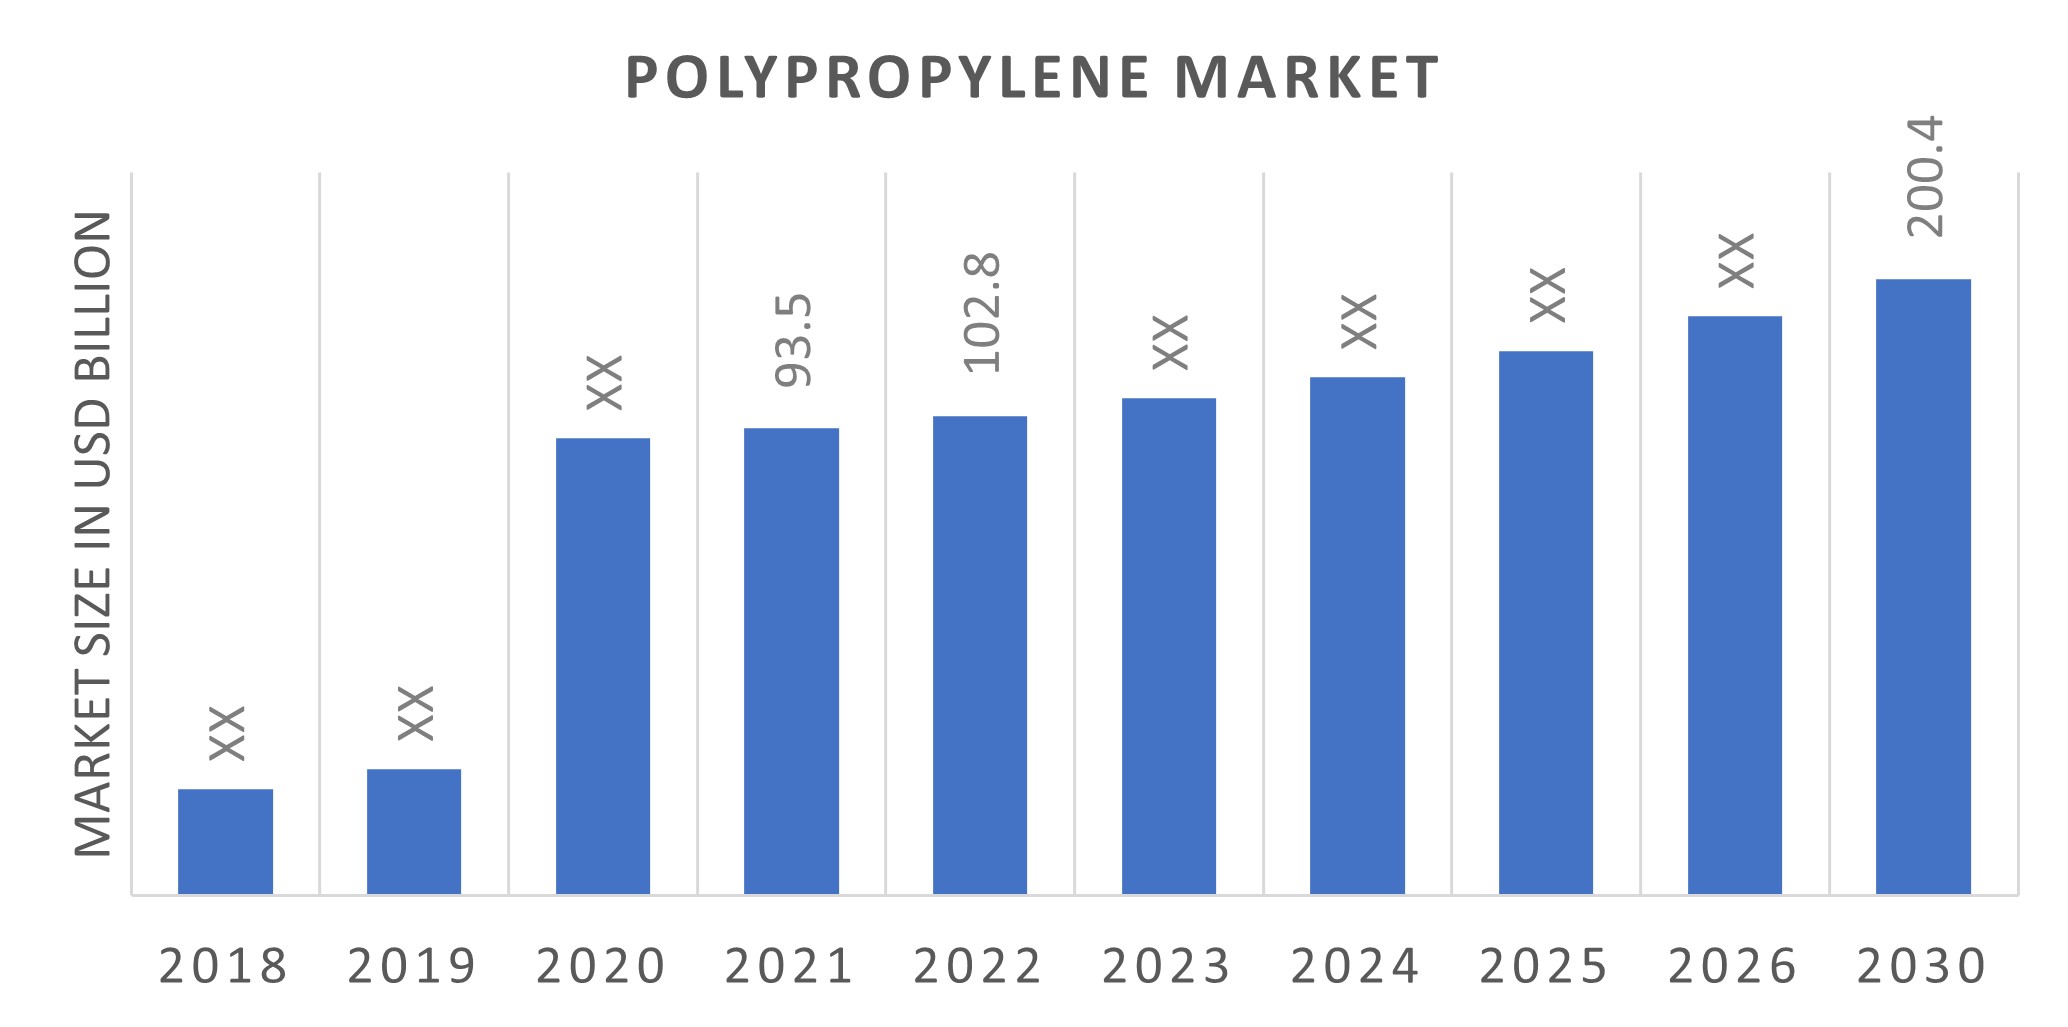 Global Polypropylene Market